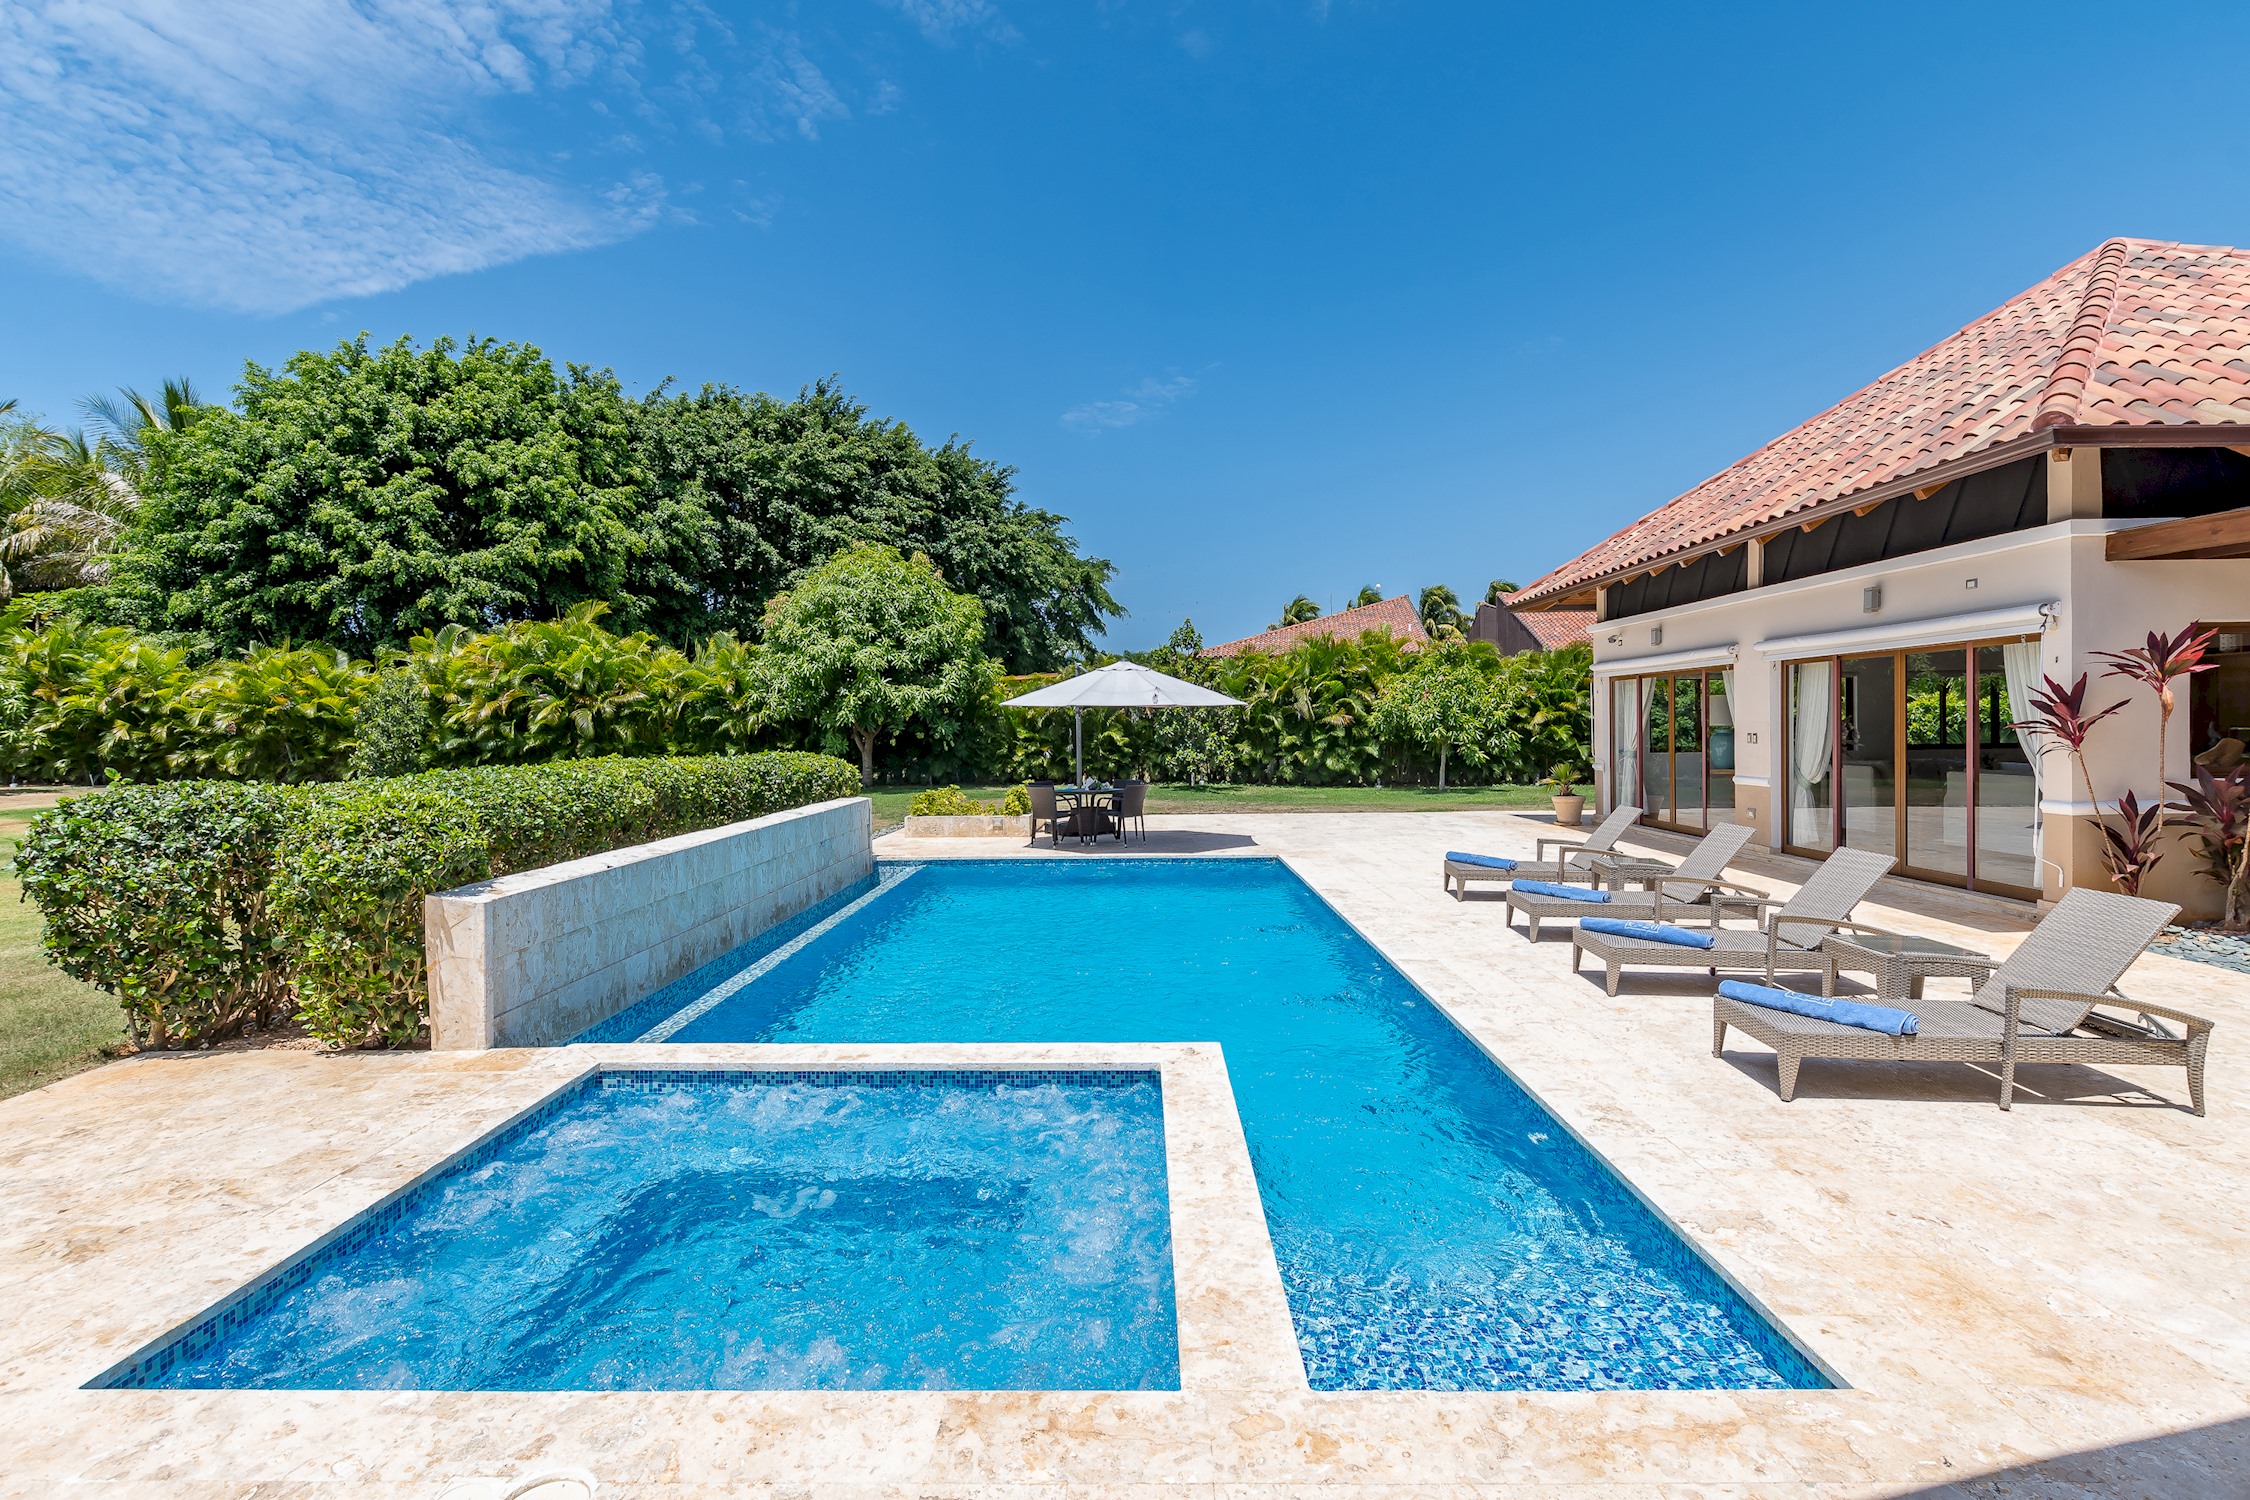 Luxurious 5-bdr villa at Casa de Campo – pool, jacuzzi, games, hibachi, staff 2